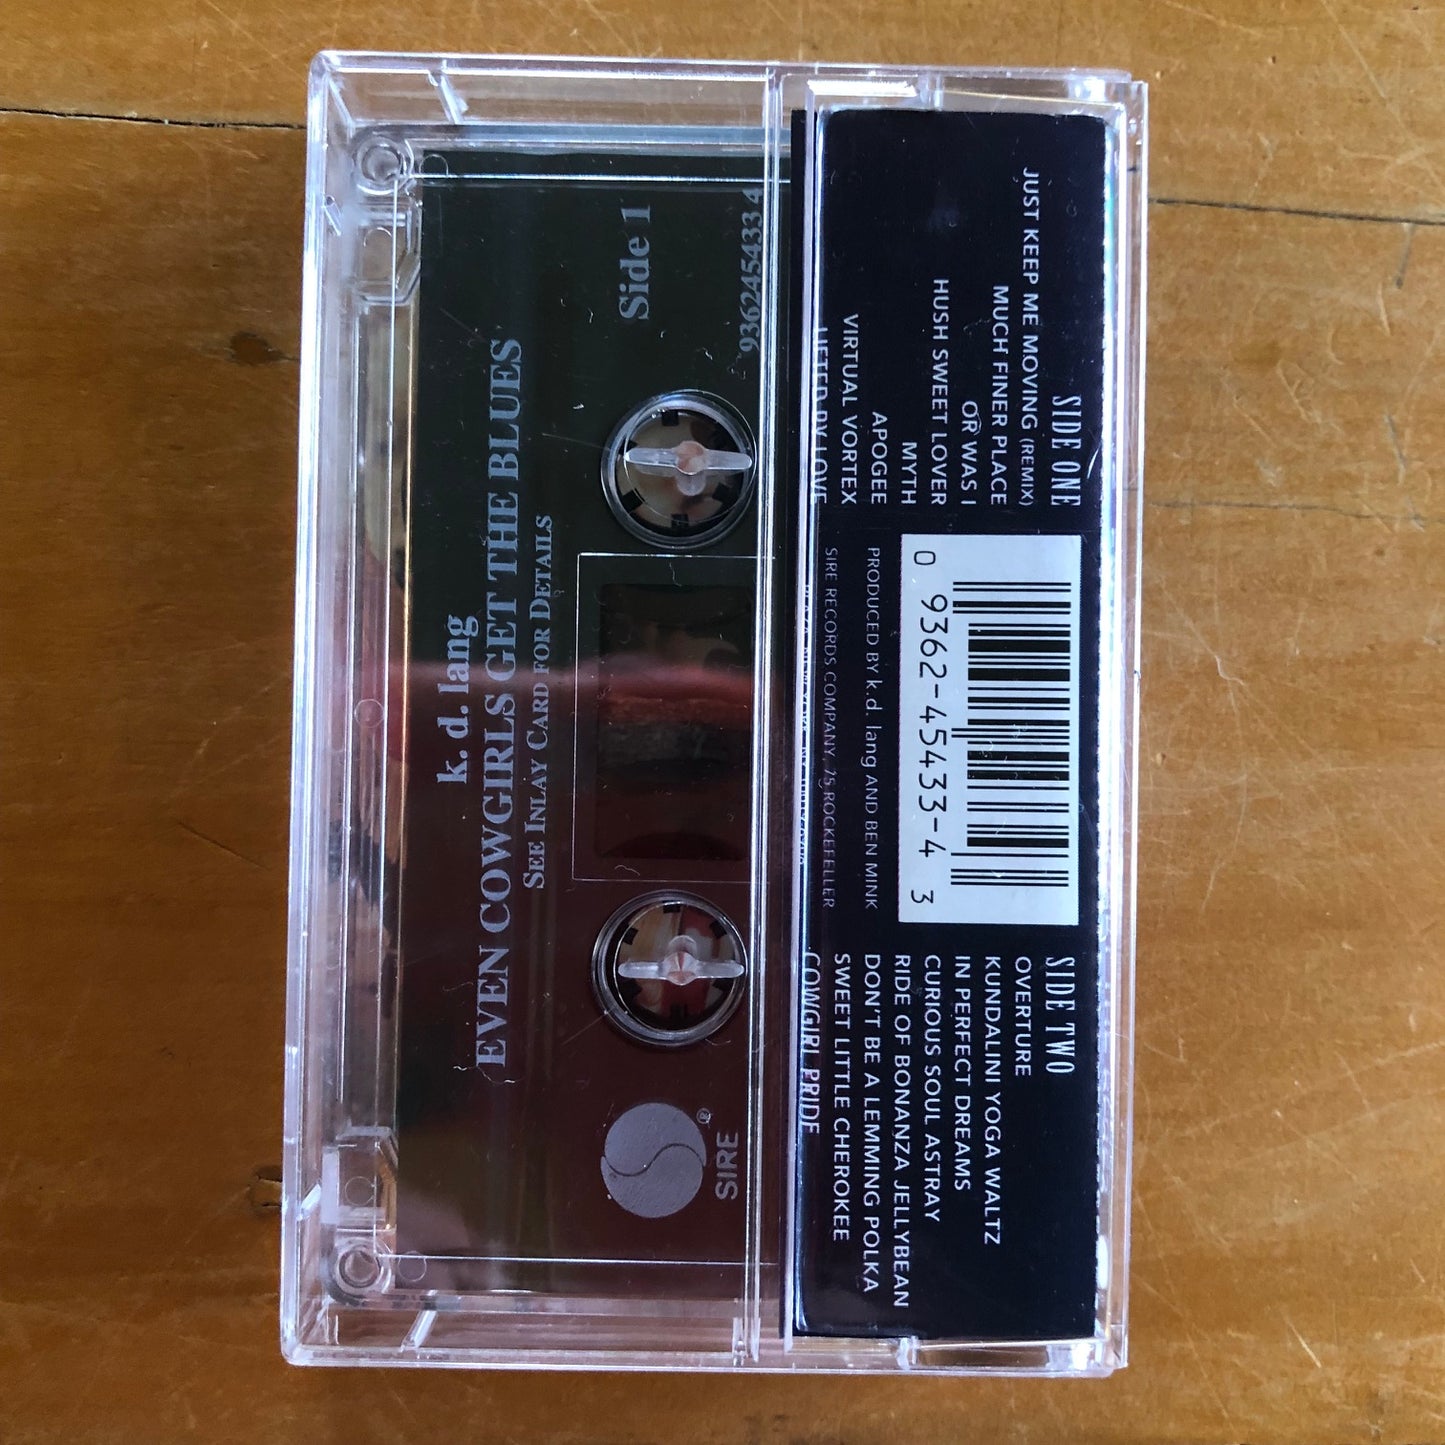 k.d.lang - Even Cowgirls Get The Blues (cassette)